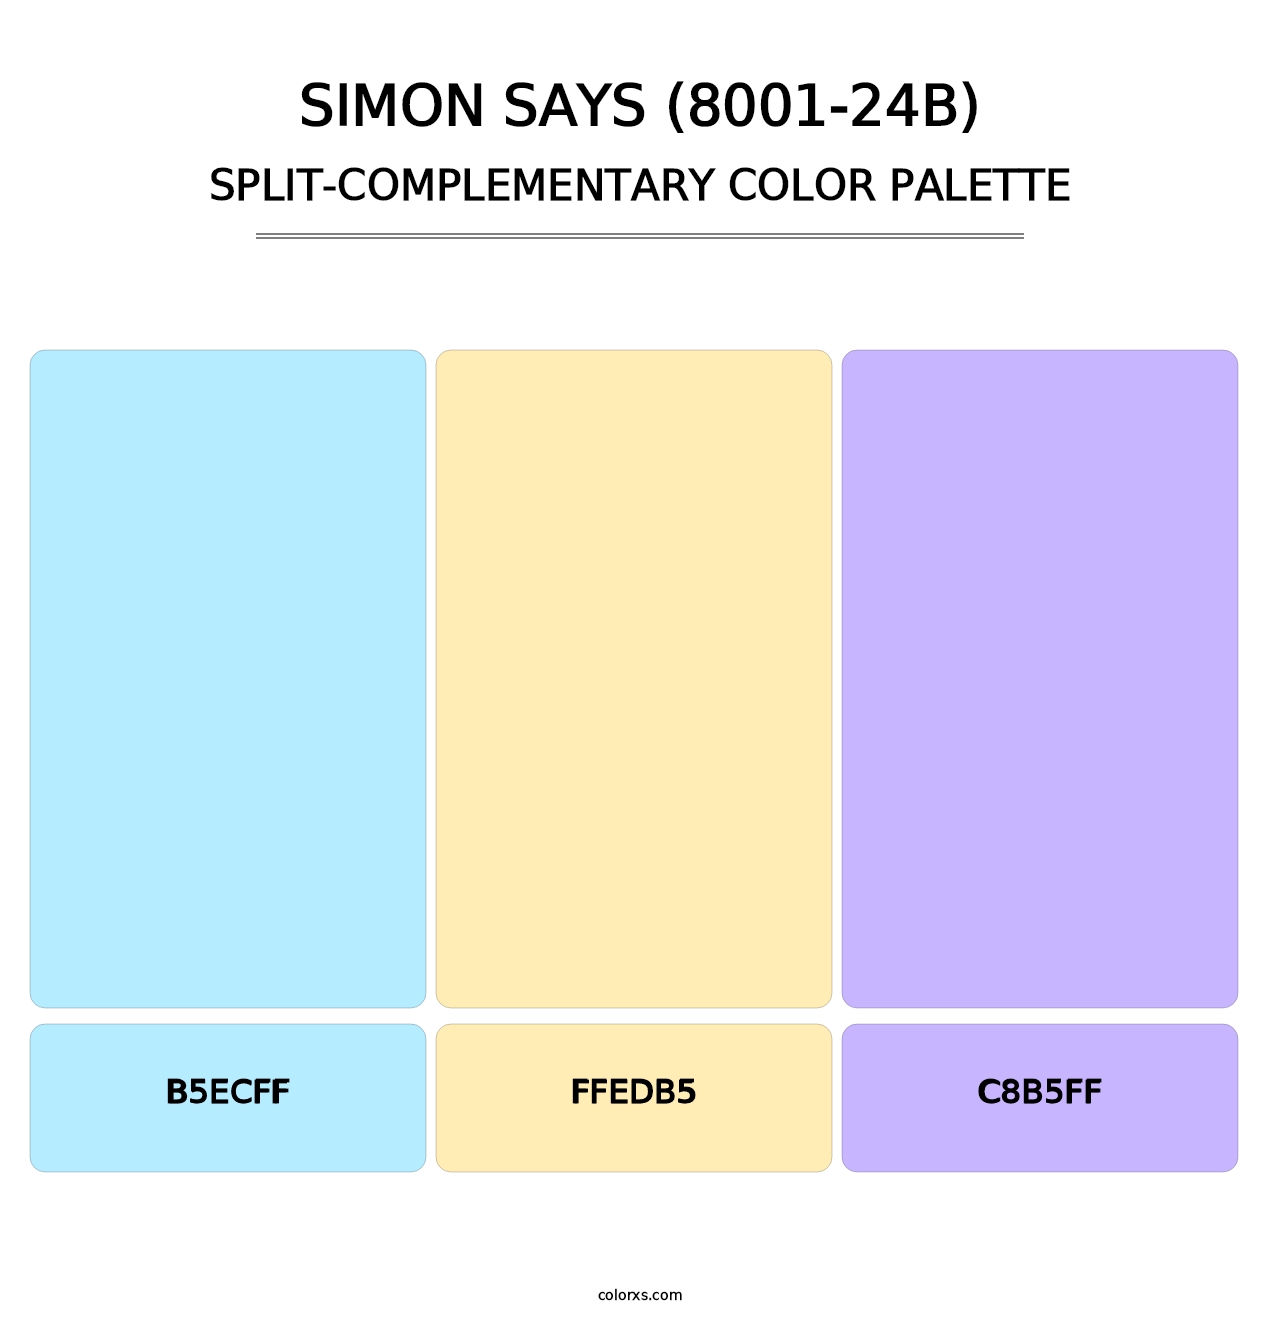 Simon Says (8001-24B) - Split-Complementary Color Palette